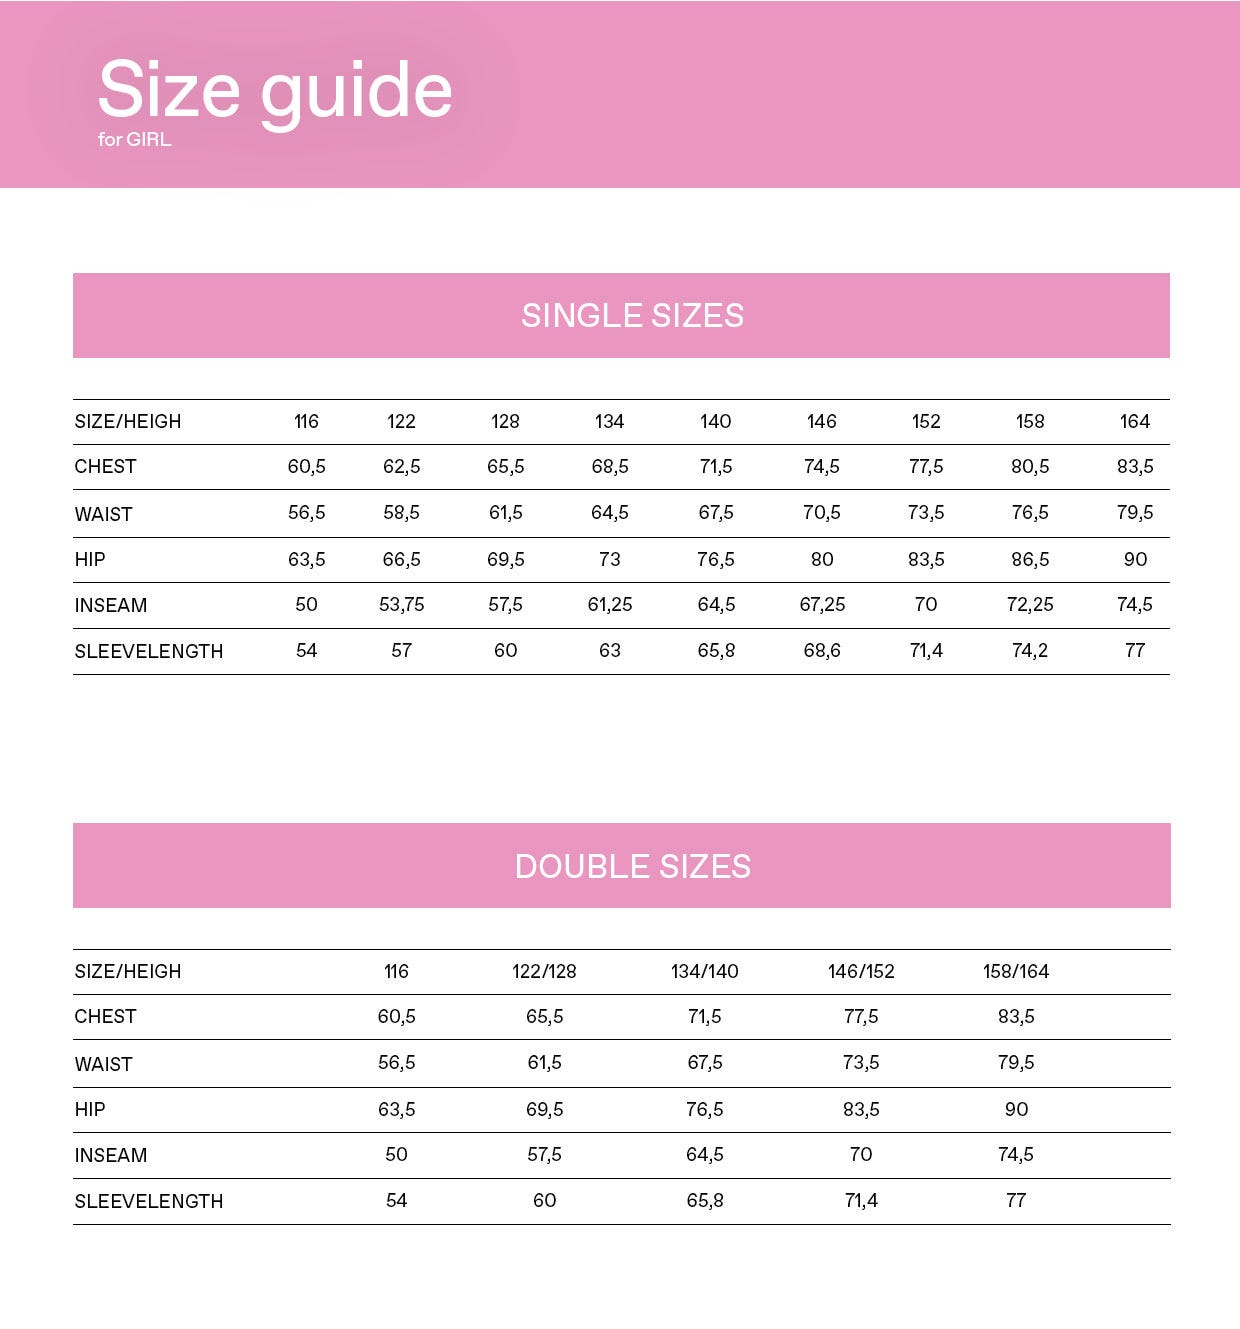 Size Chart - Women's Leggings - Semantic